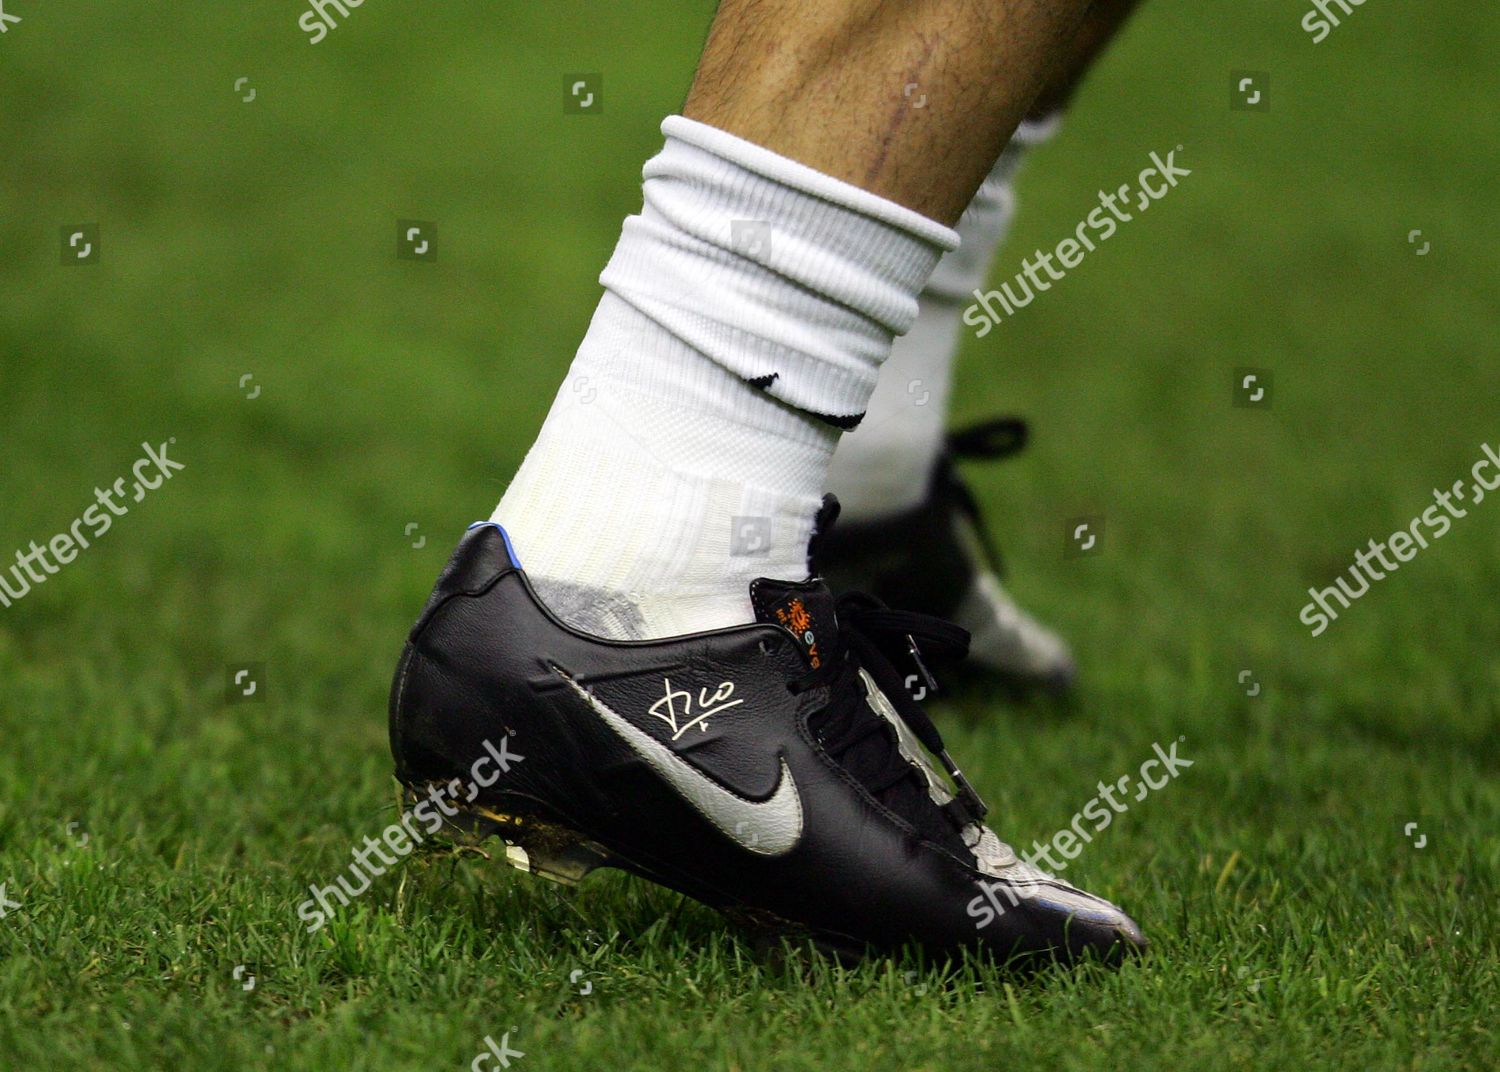 Personalized Nike Boots Luis Figo Inter - Foto de stock de editorial: imagen de stock | Shutterstock